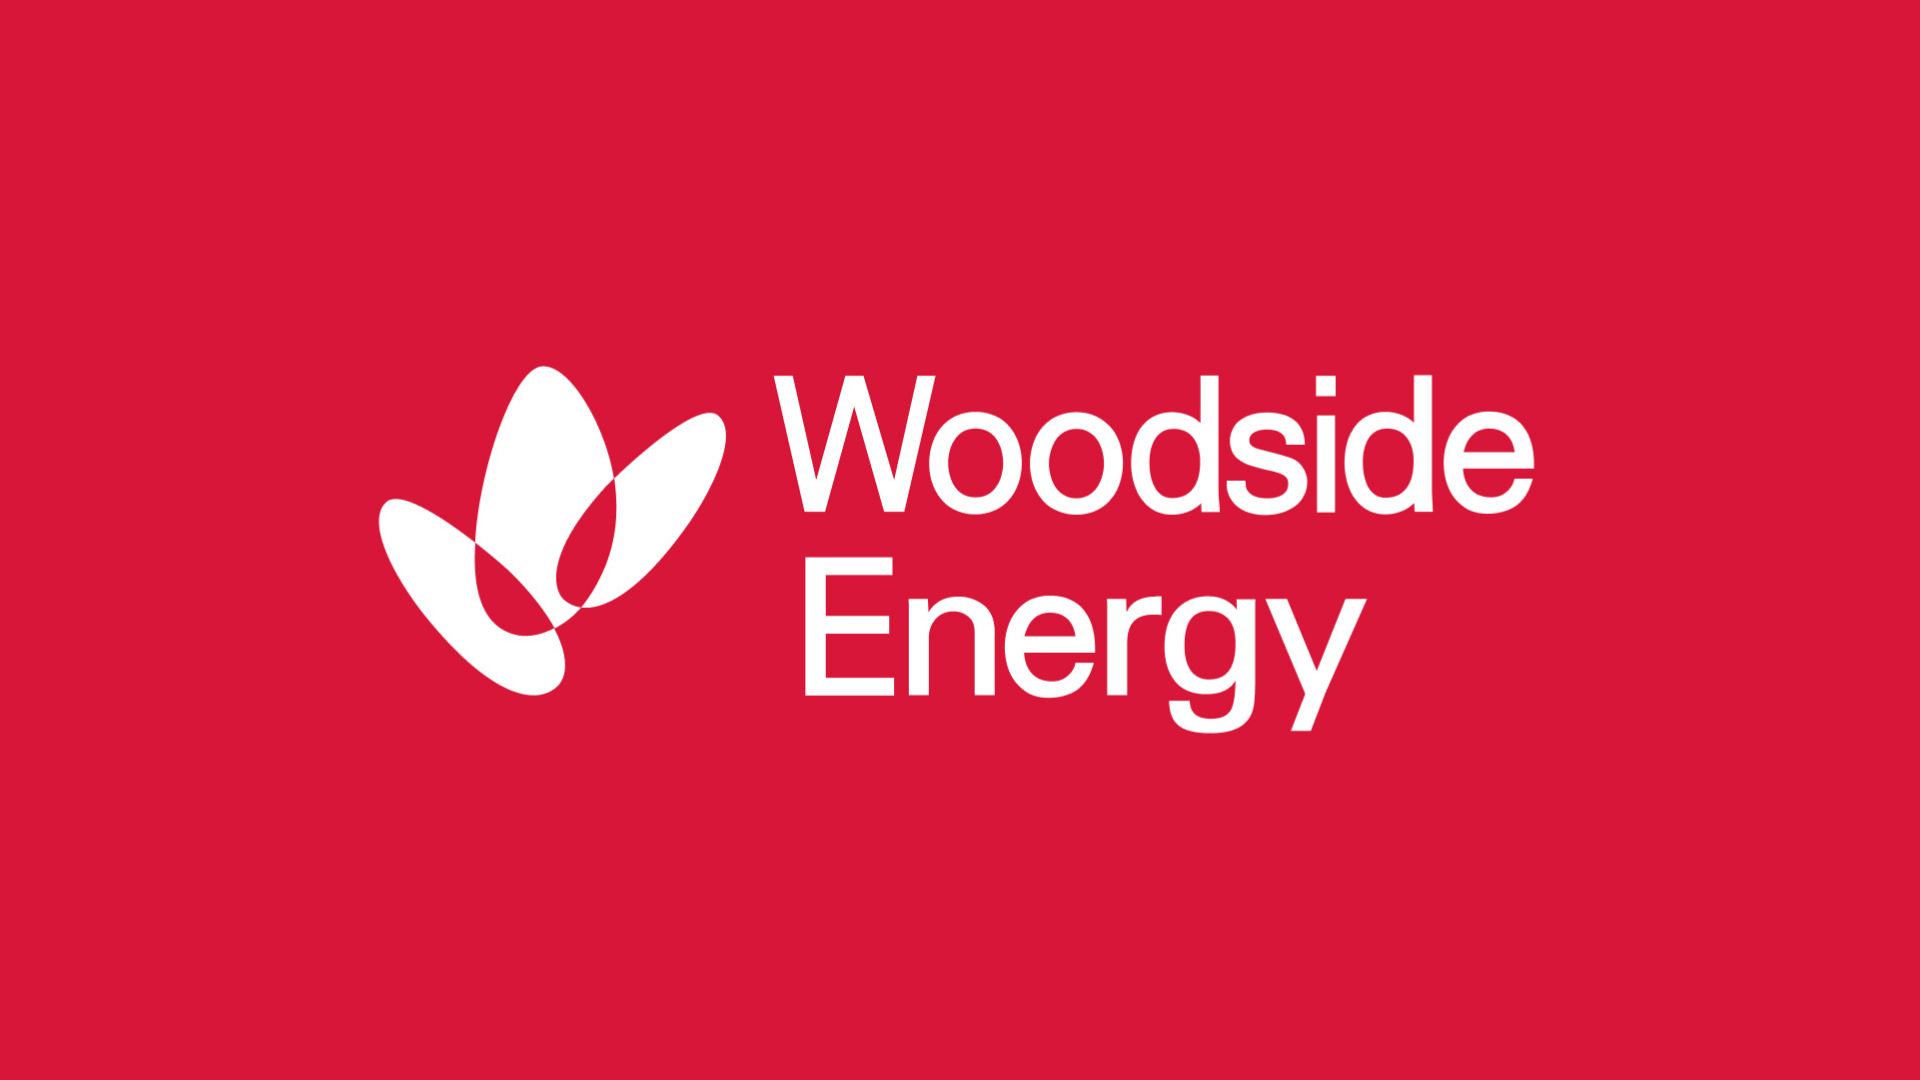 Woodside Energy increases support for regional communities Australian